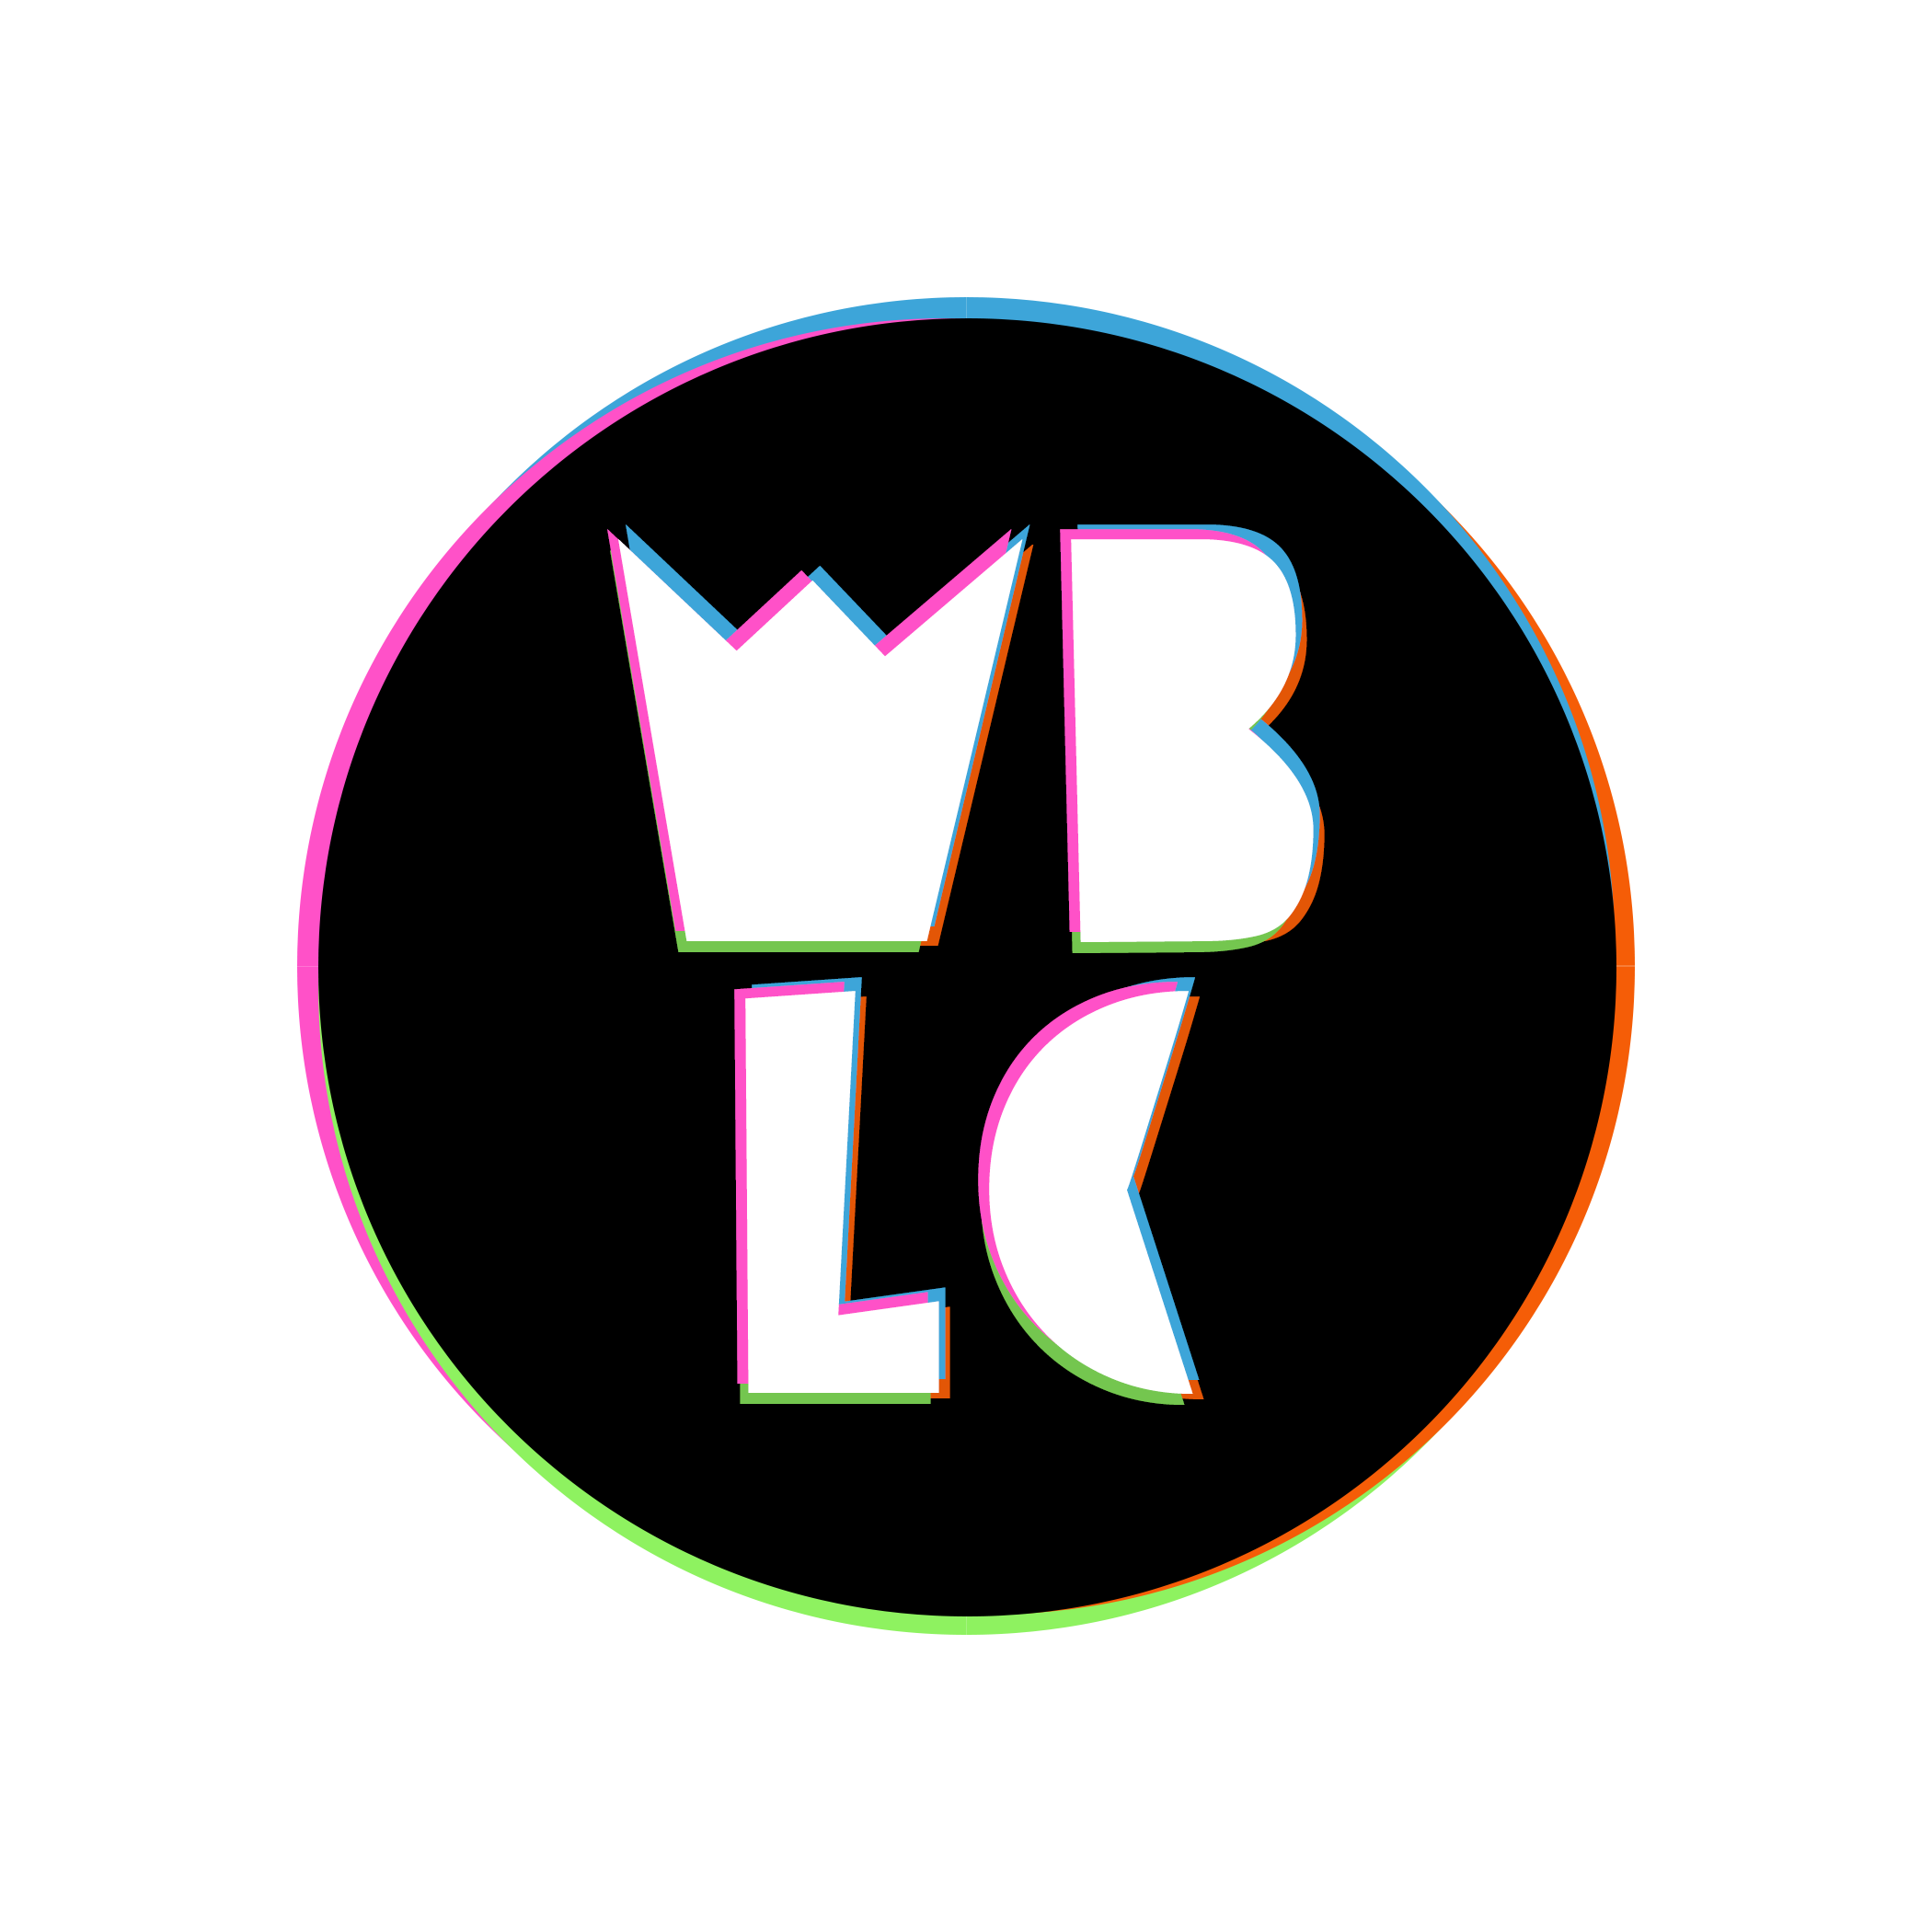 WBLC